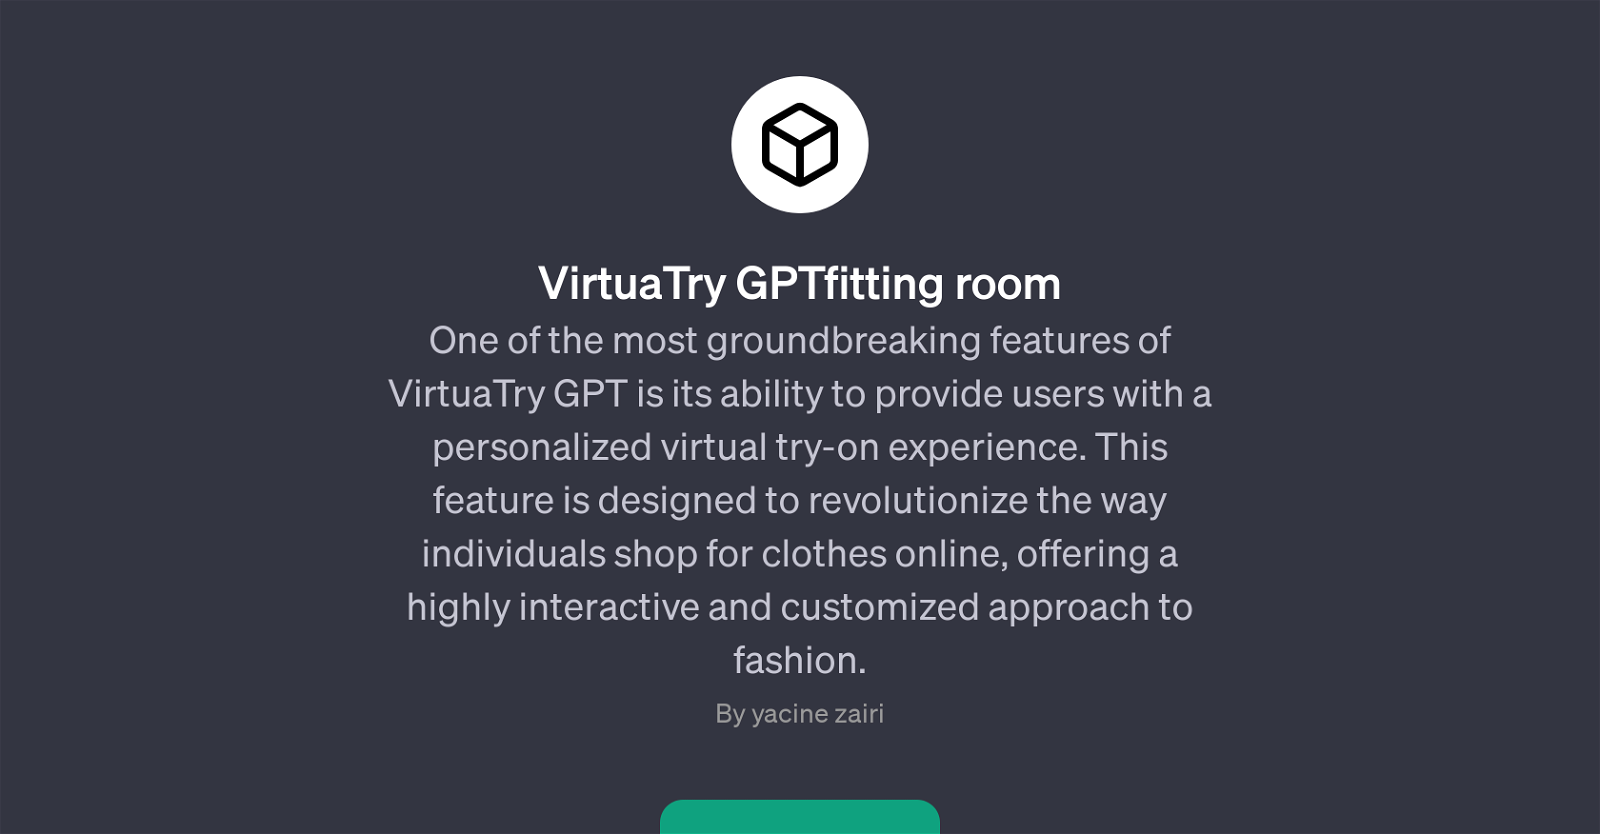 VirtuaTry GPTfitting room website